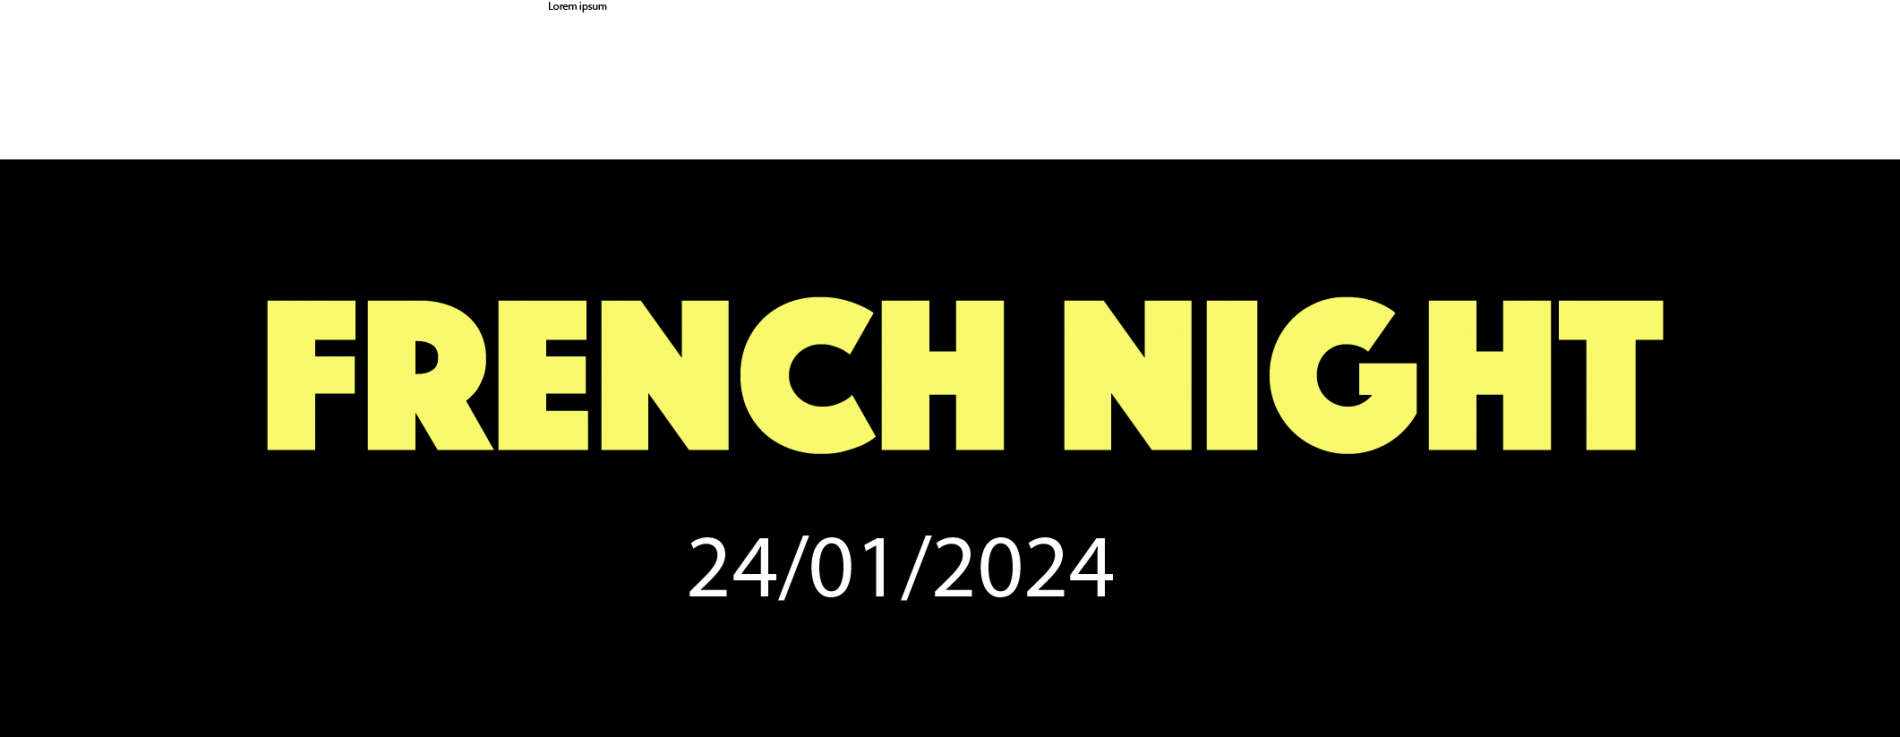 FRENCH NIGHT 24/01/2024